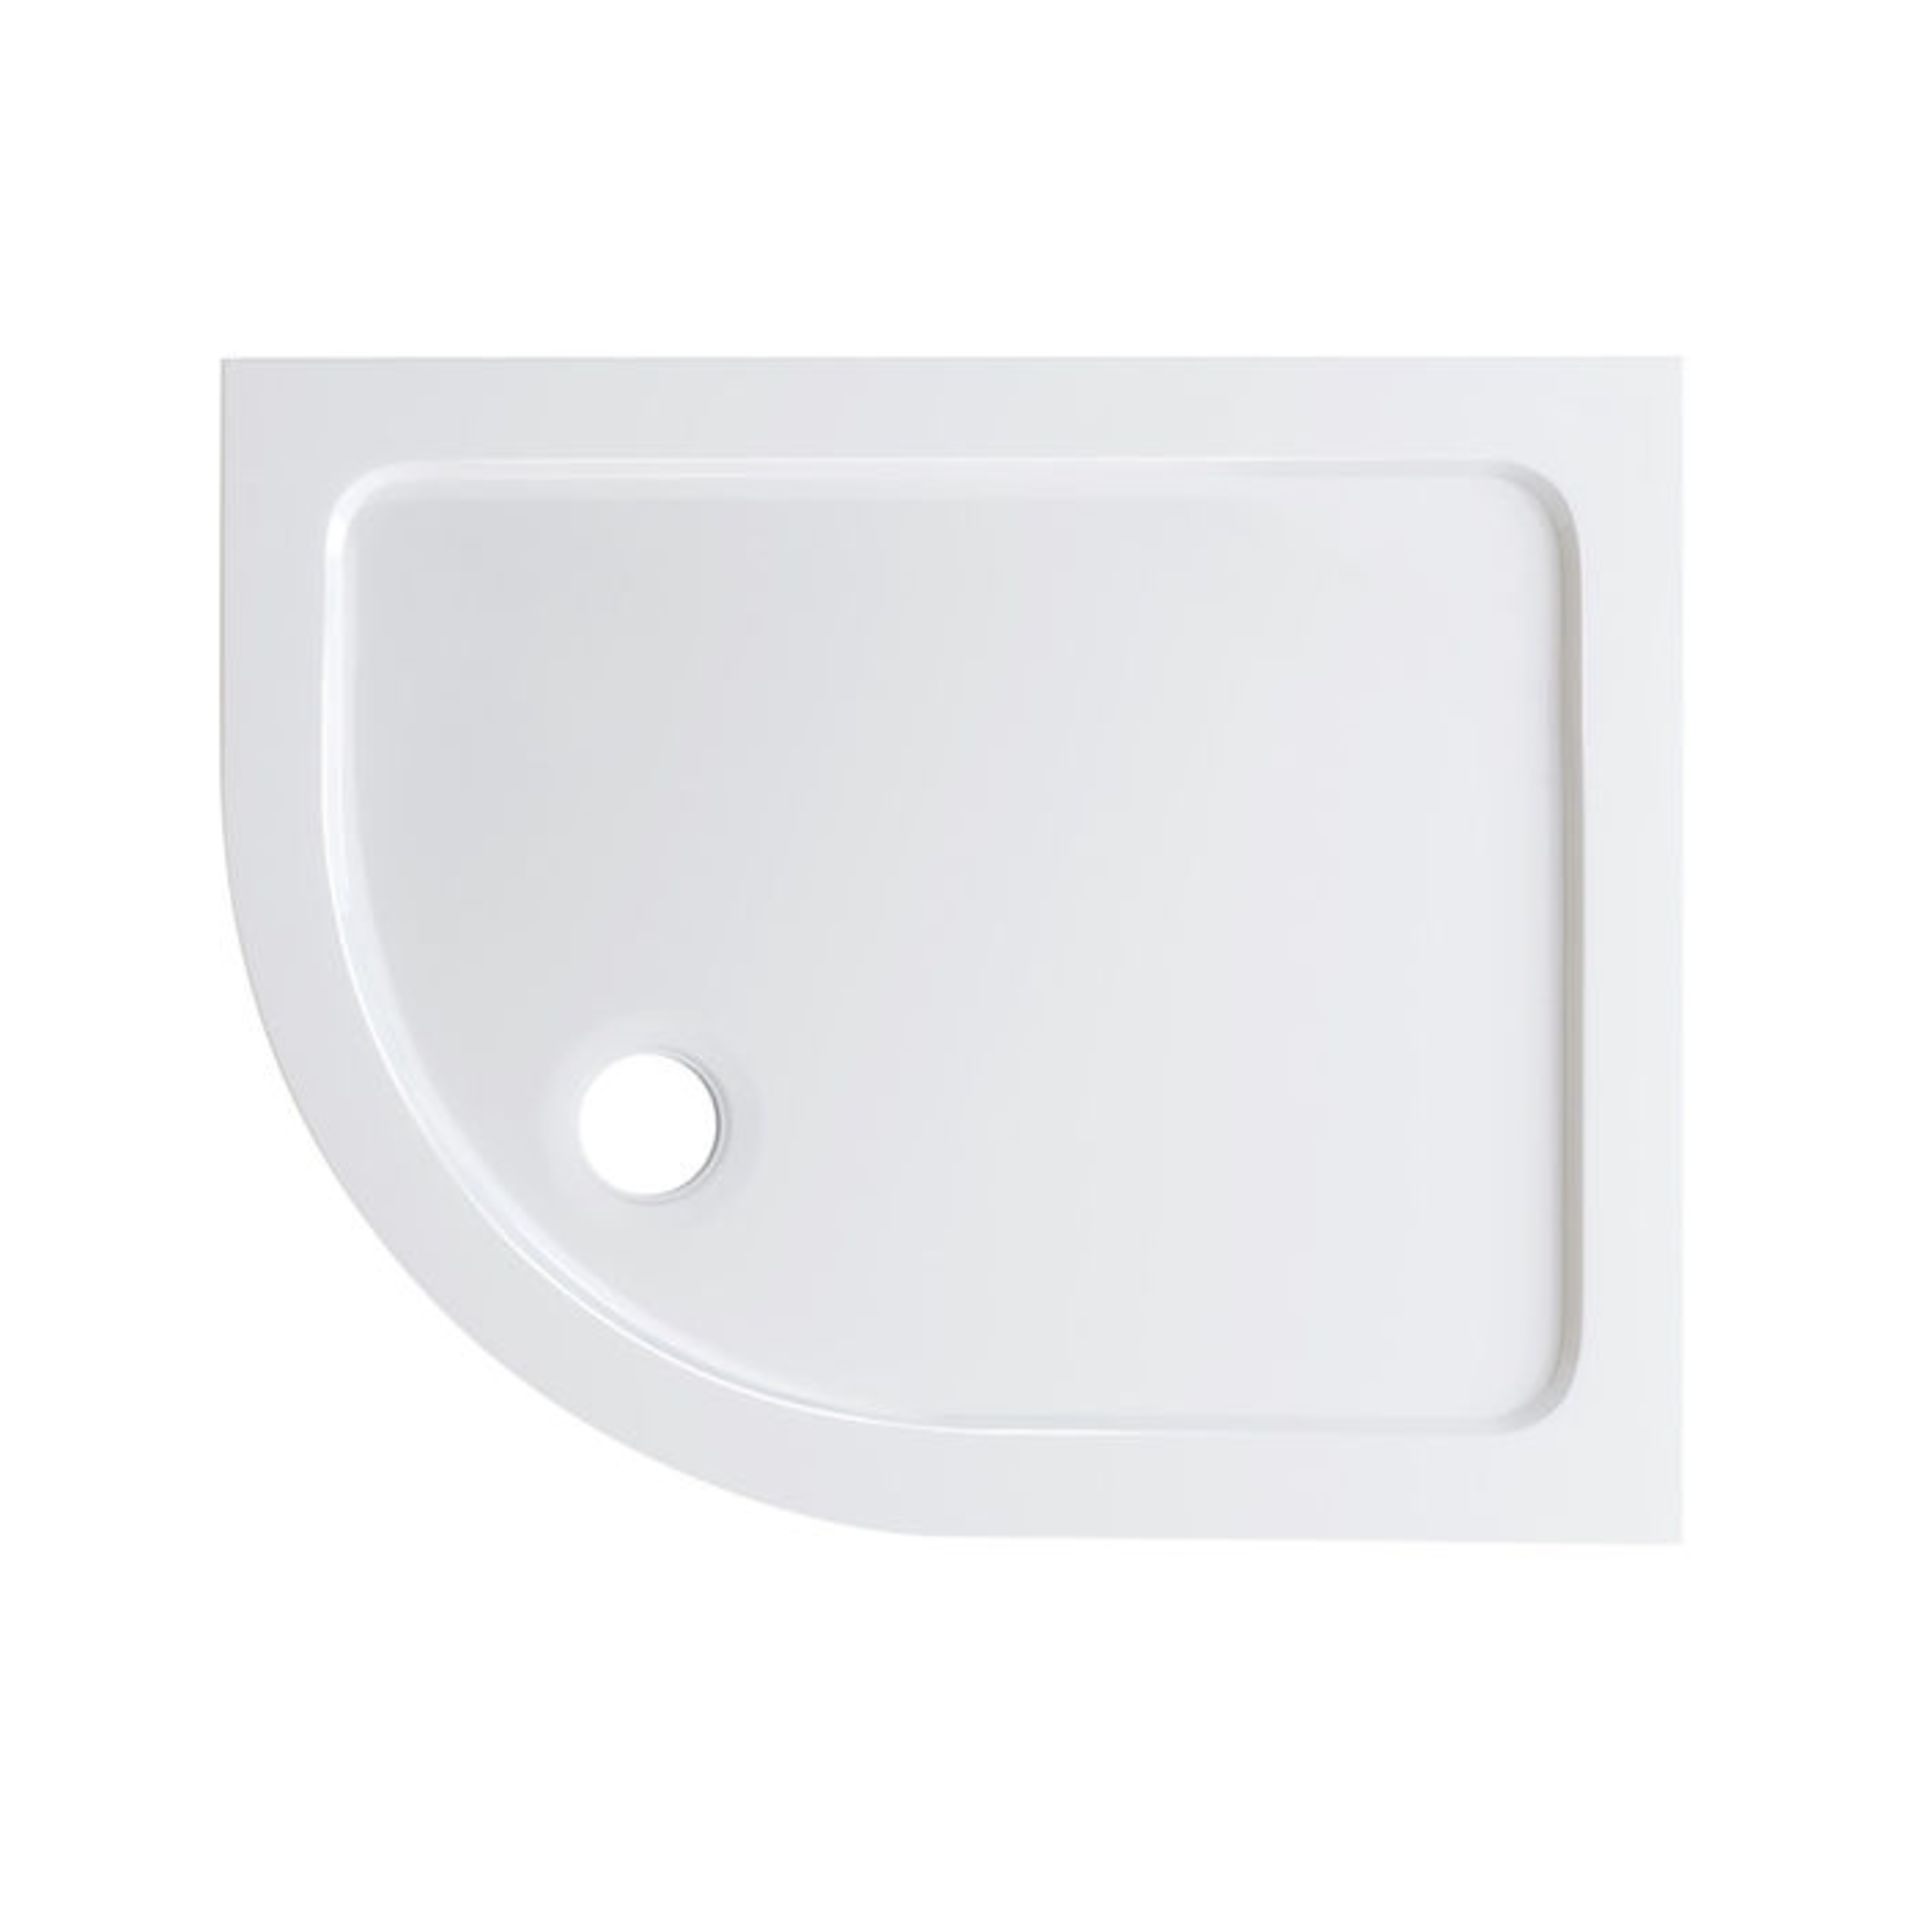 (TA83) 1000x800mm Offset Quadrant Ultra Slim Stone Shower Tray - Left. Low profile ultra slim design